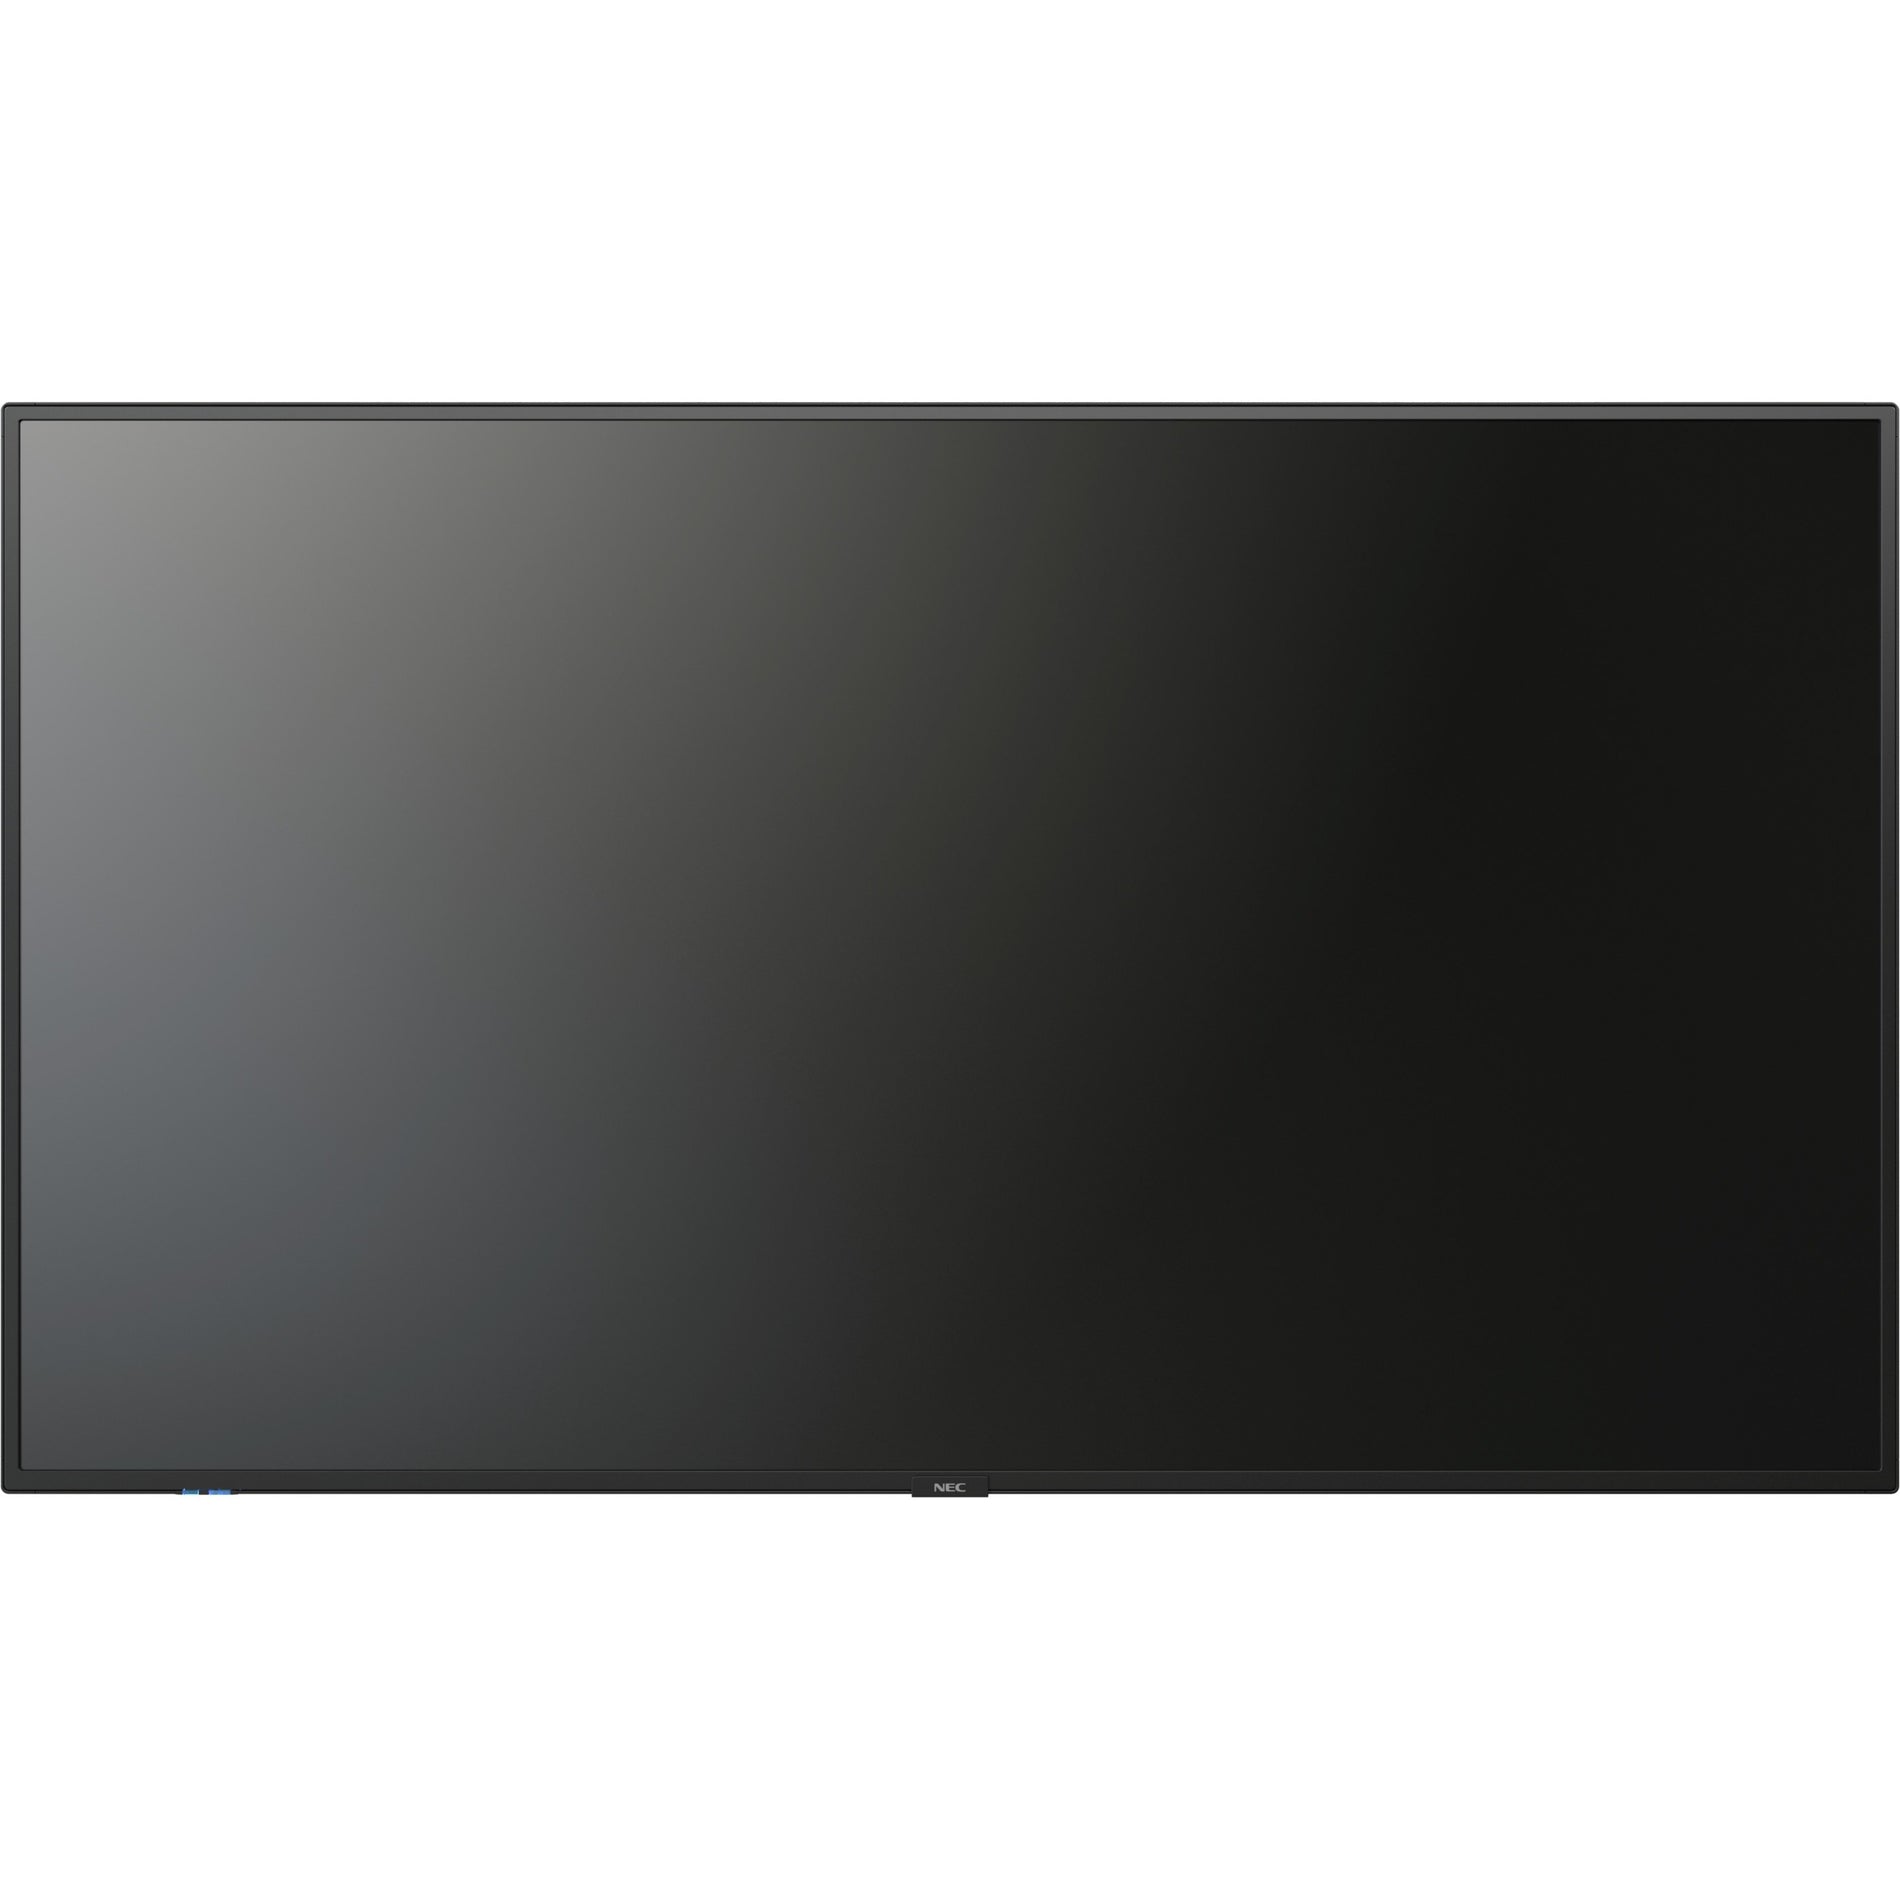 NEC Display M491 49" Ultra High Definition Professional Display, 500 Nit, 8-bit+FRC, 2160p, 3 Year Warranty, ENERGY STAR 8.0